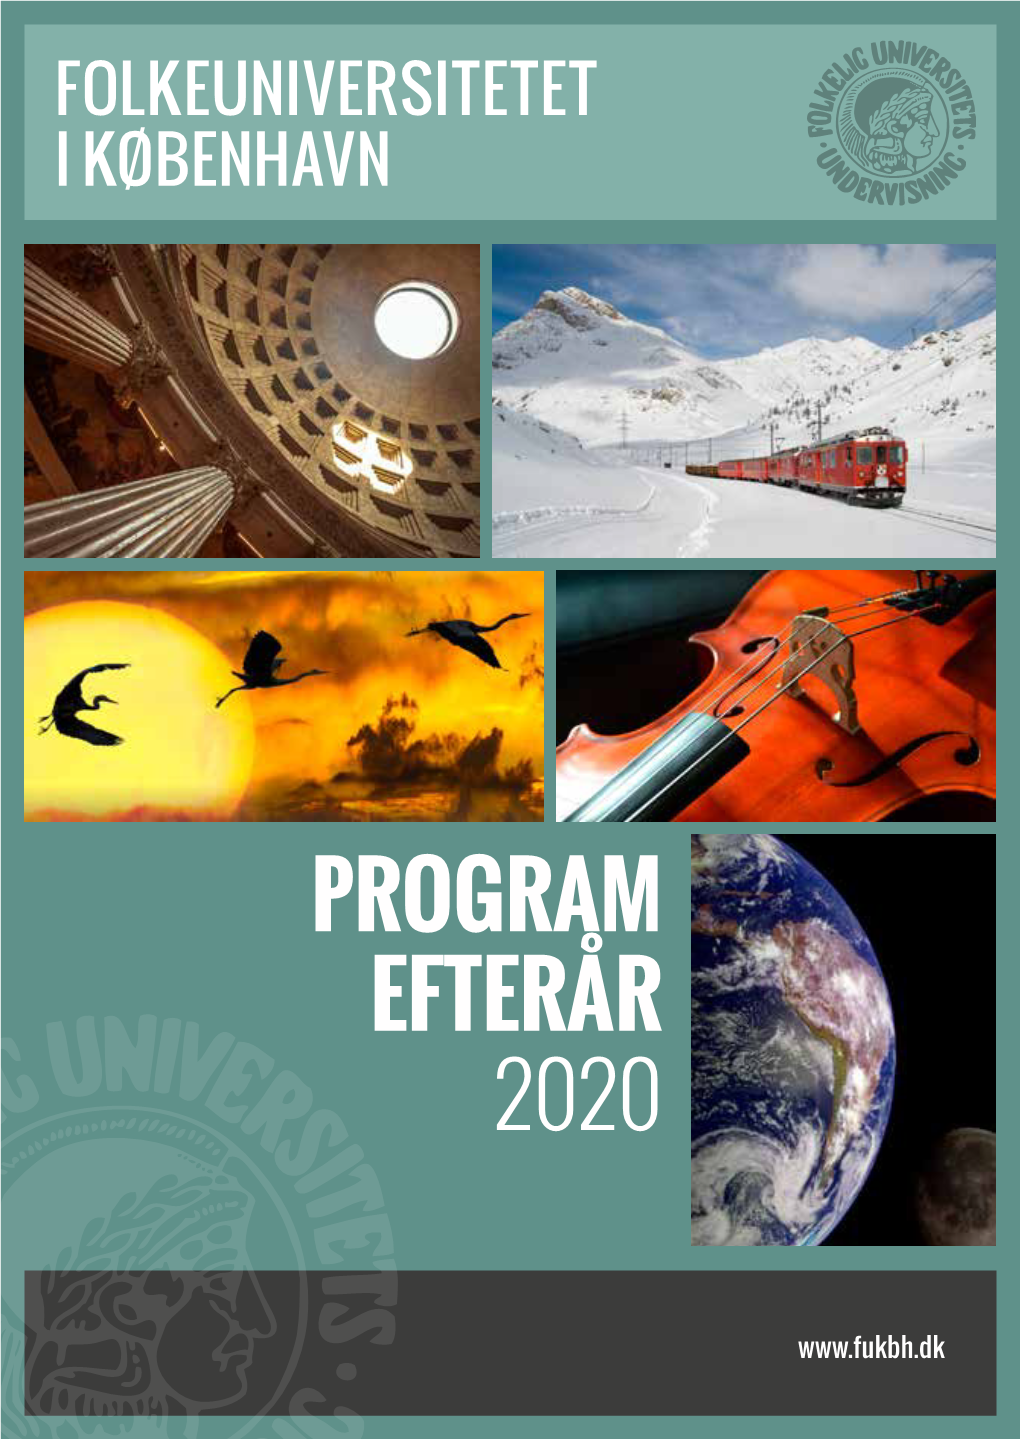 Program Efterår 2020